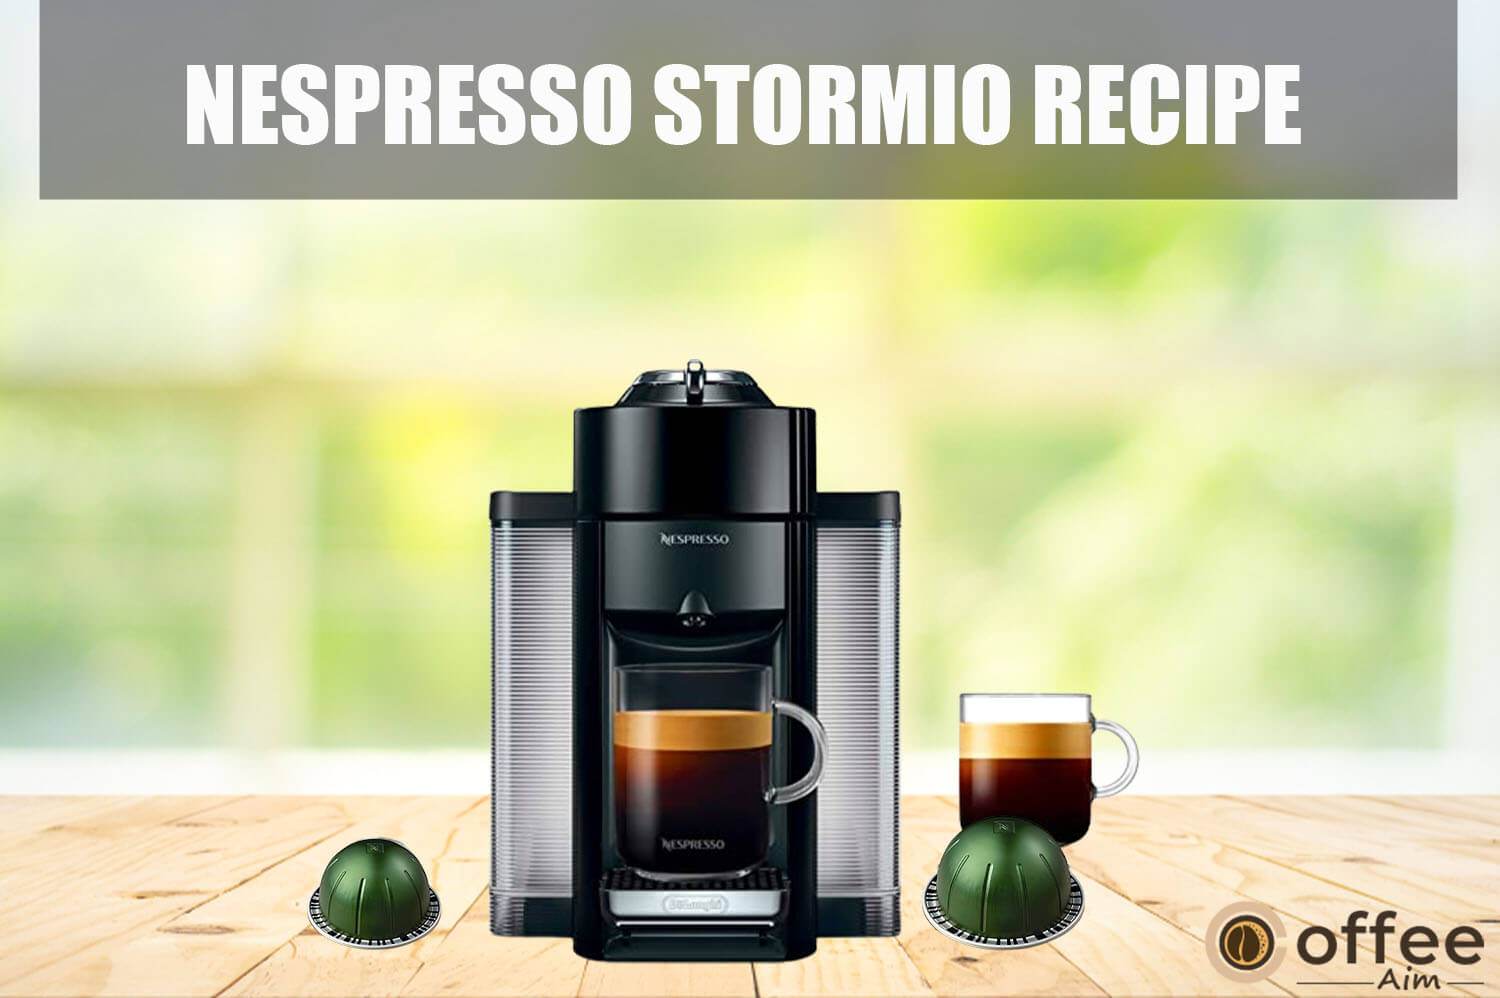 Featured image for the article "Nespresso Stormio Recipe"